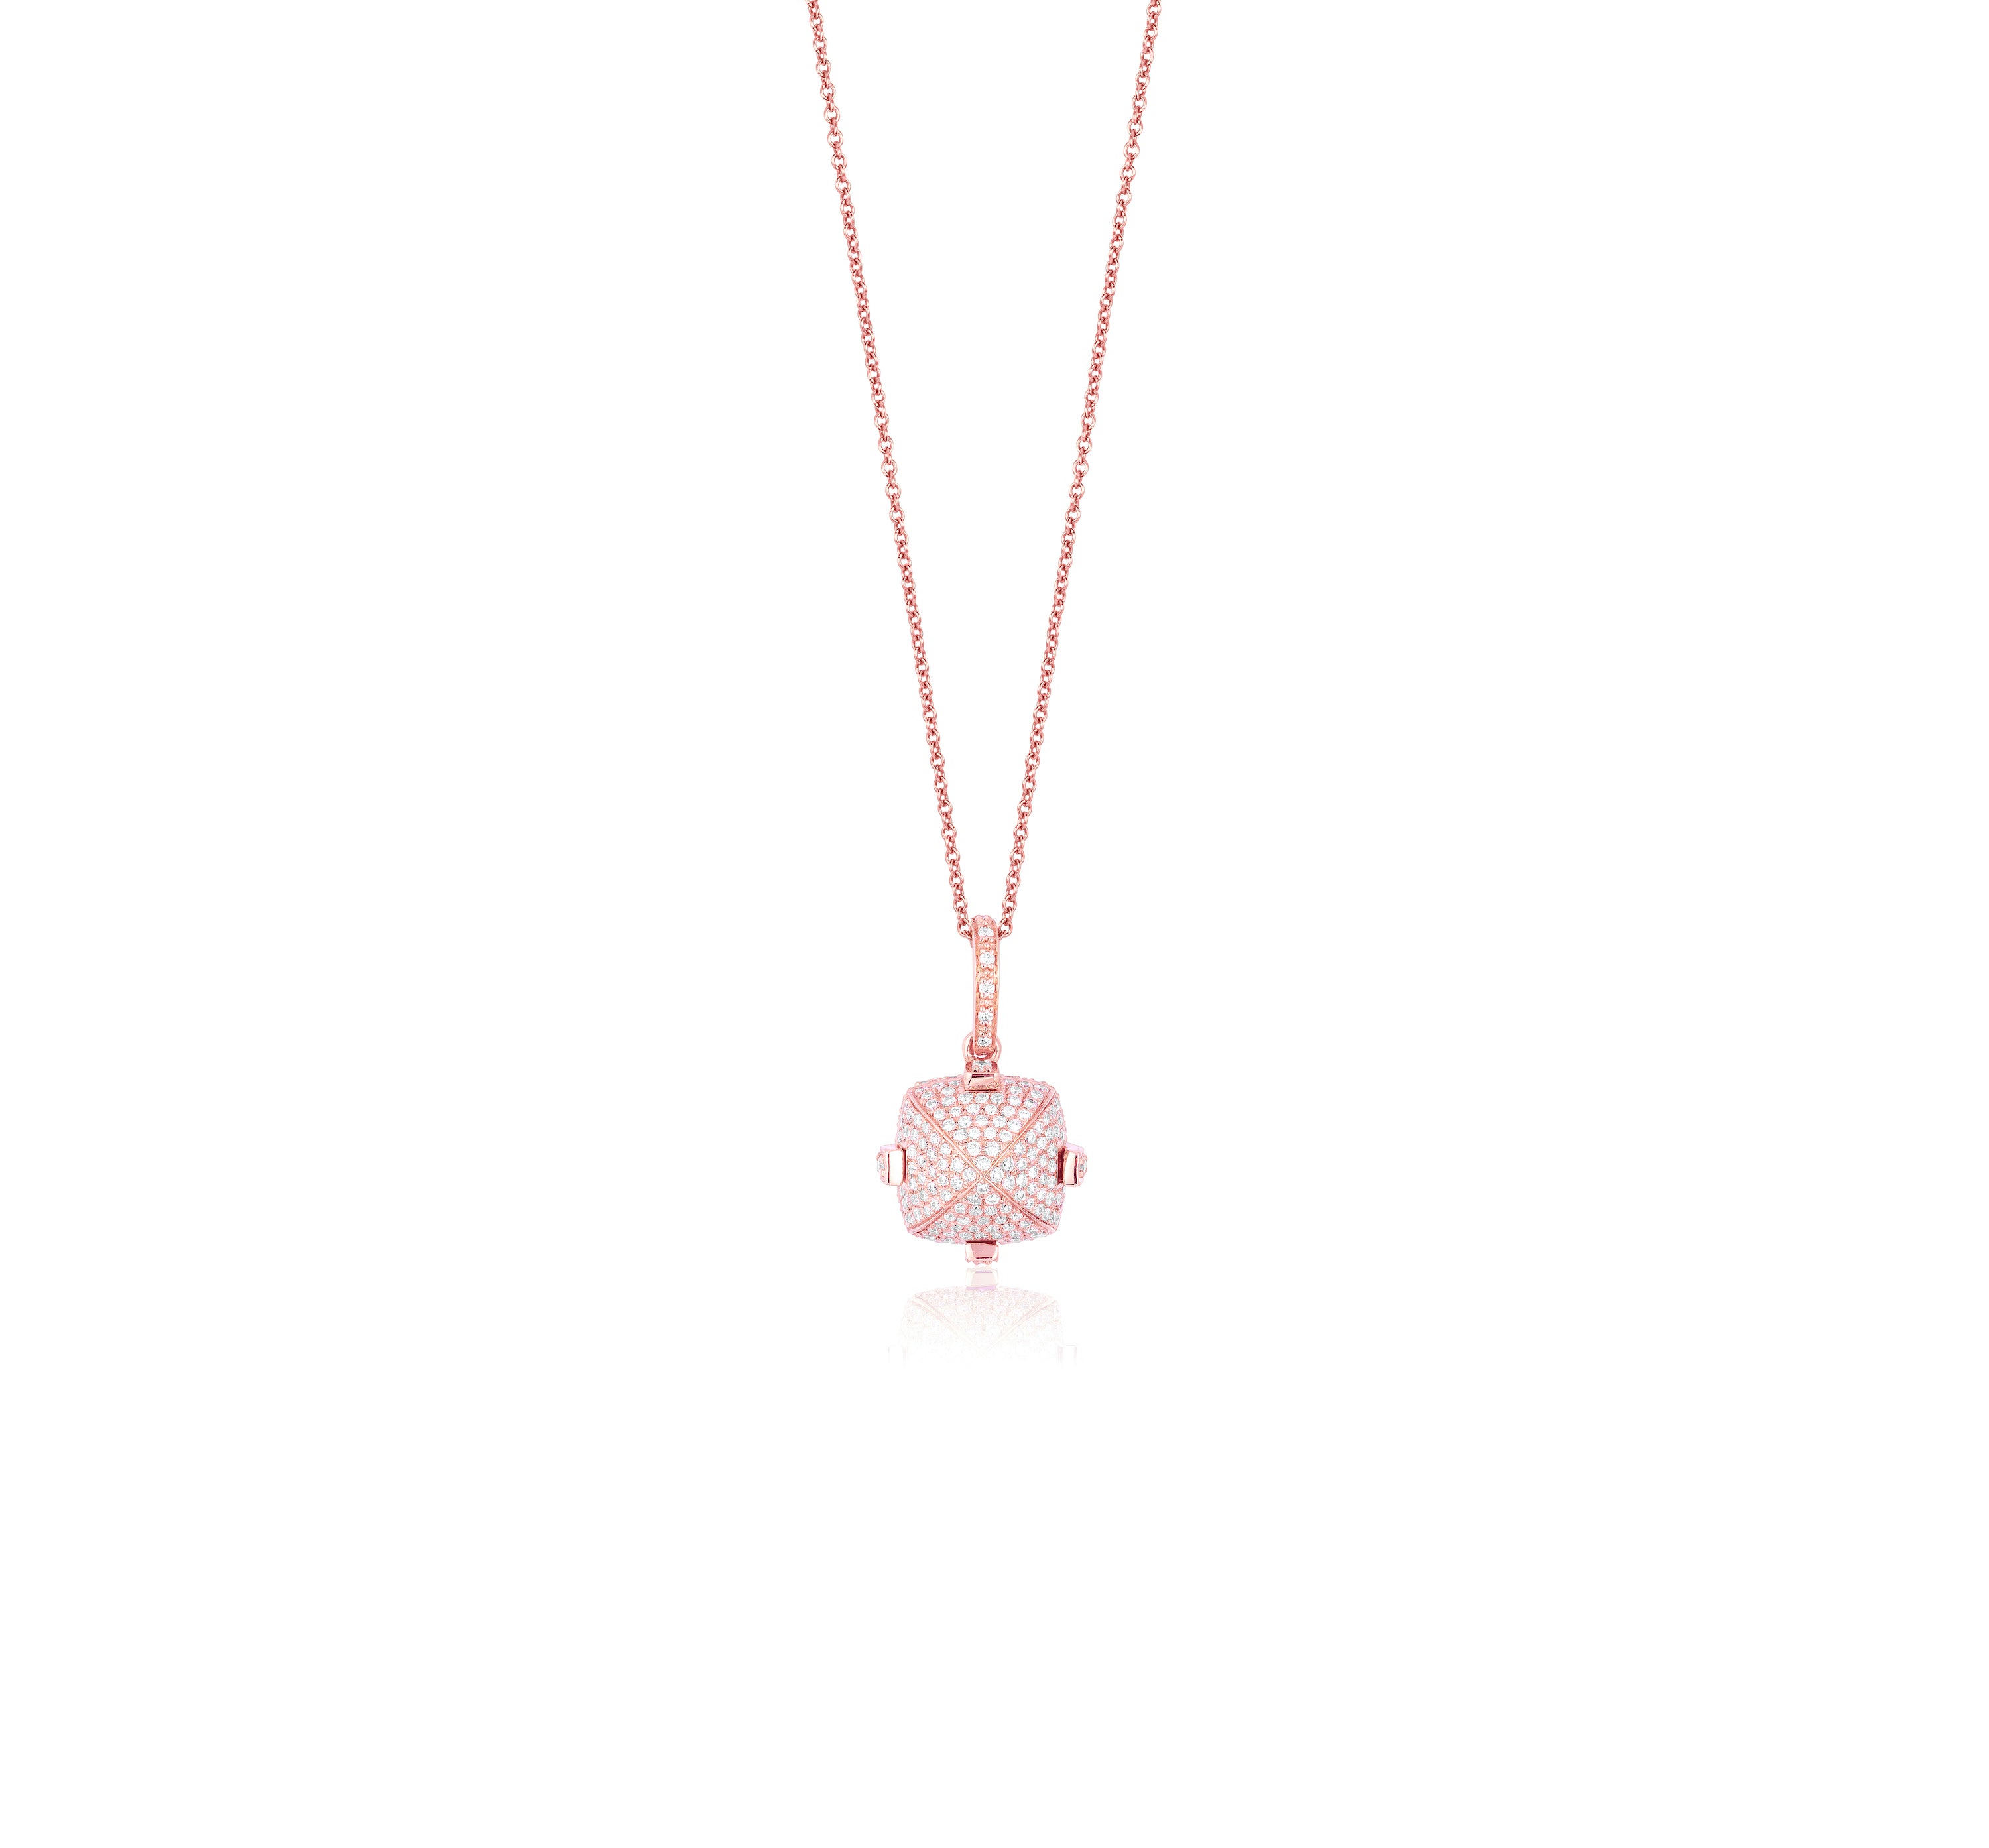 Sugarloaf Necklace, Diamonds Pendant Goshwara Rose Gold  